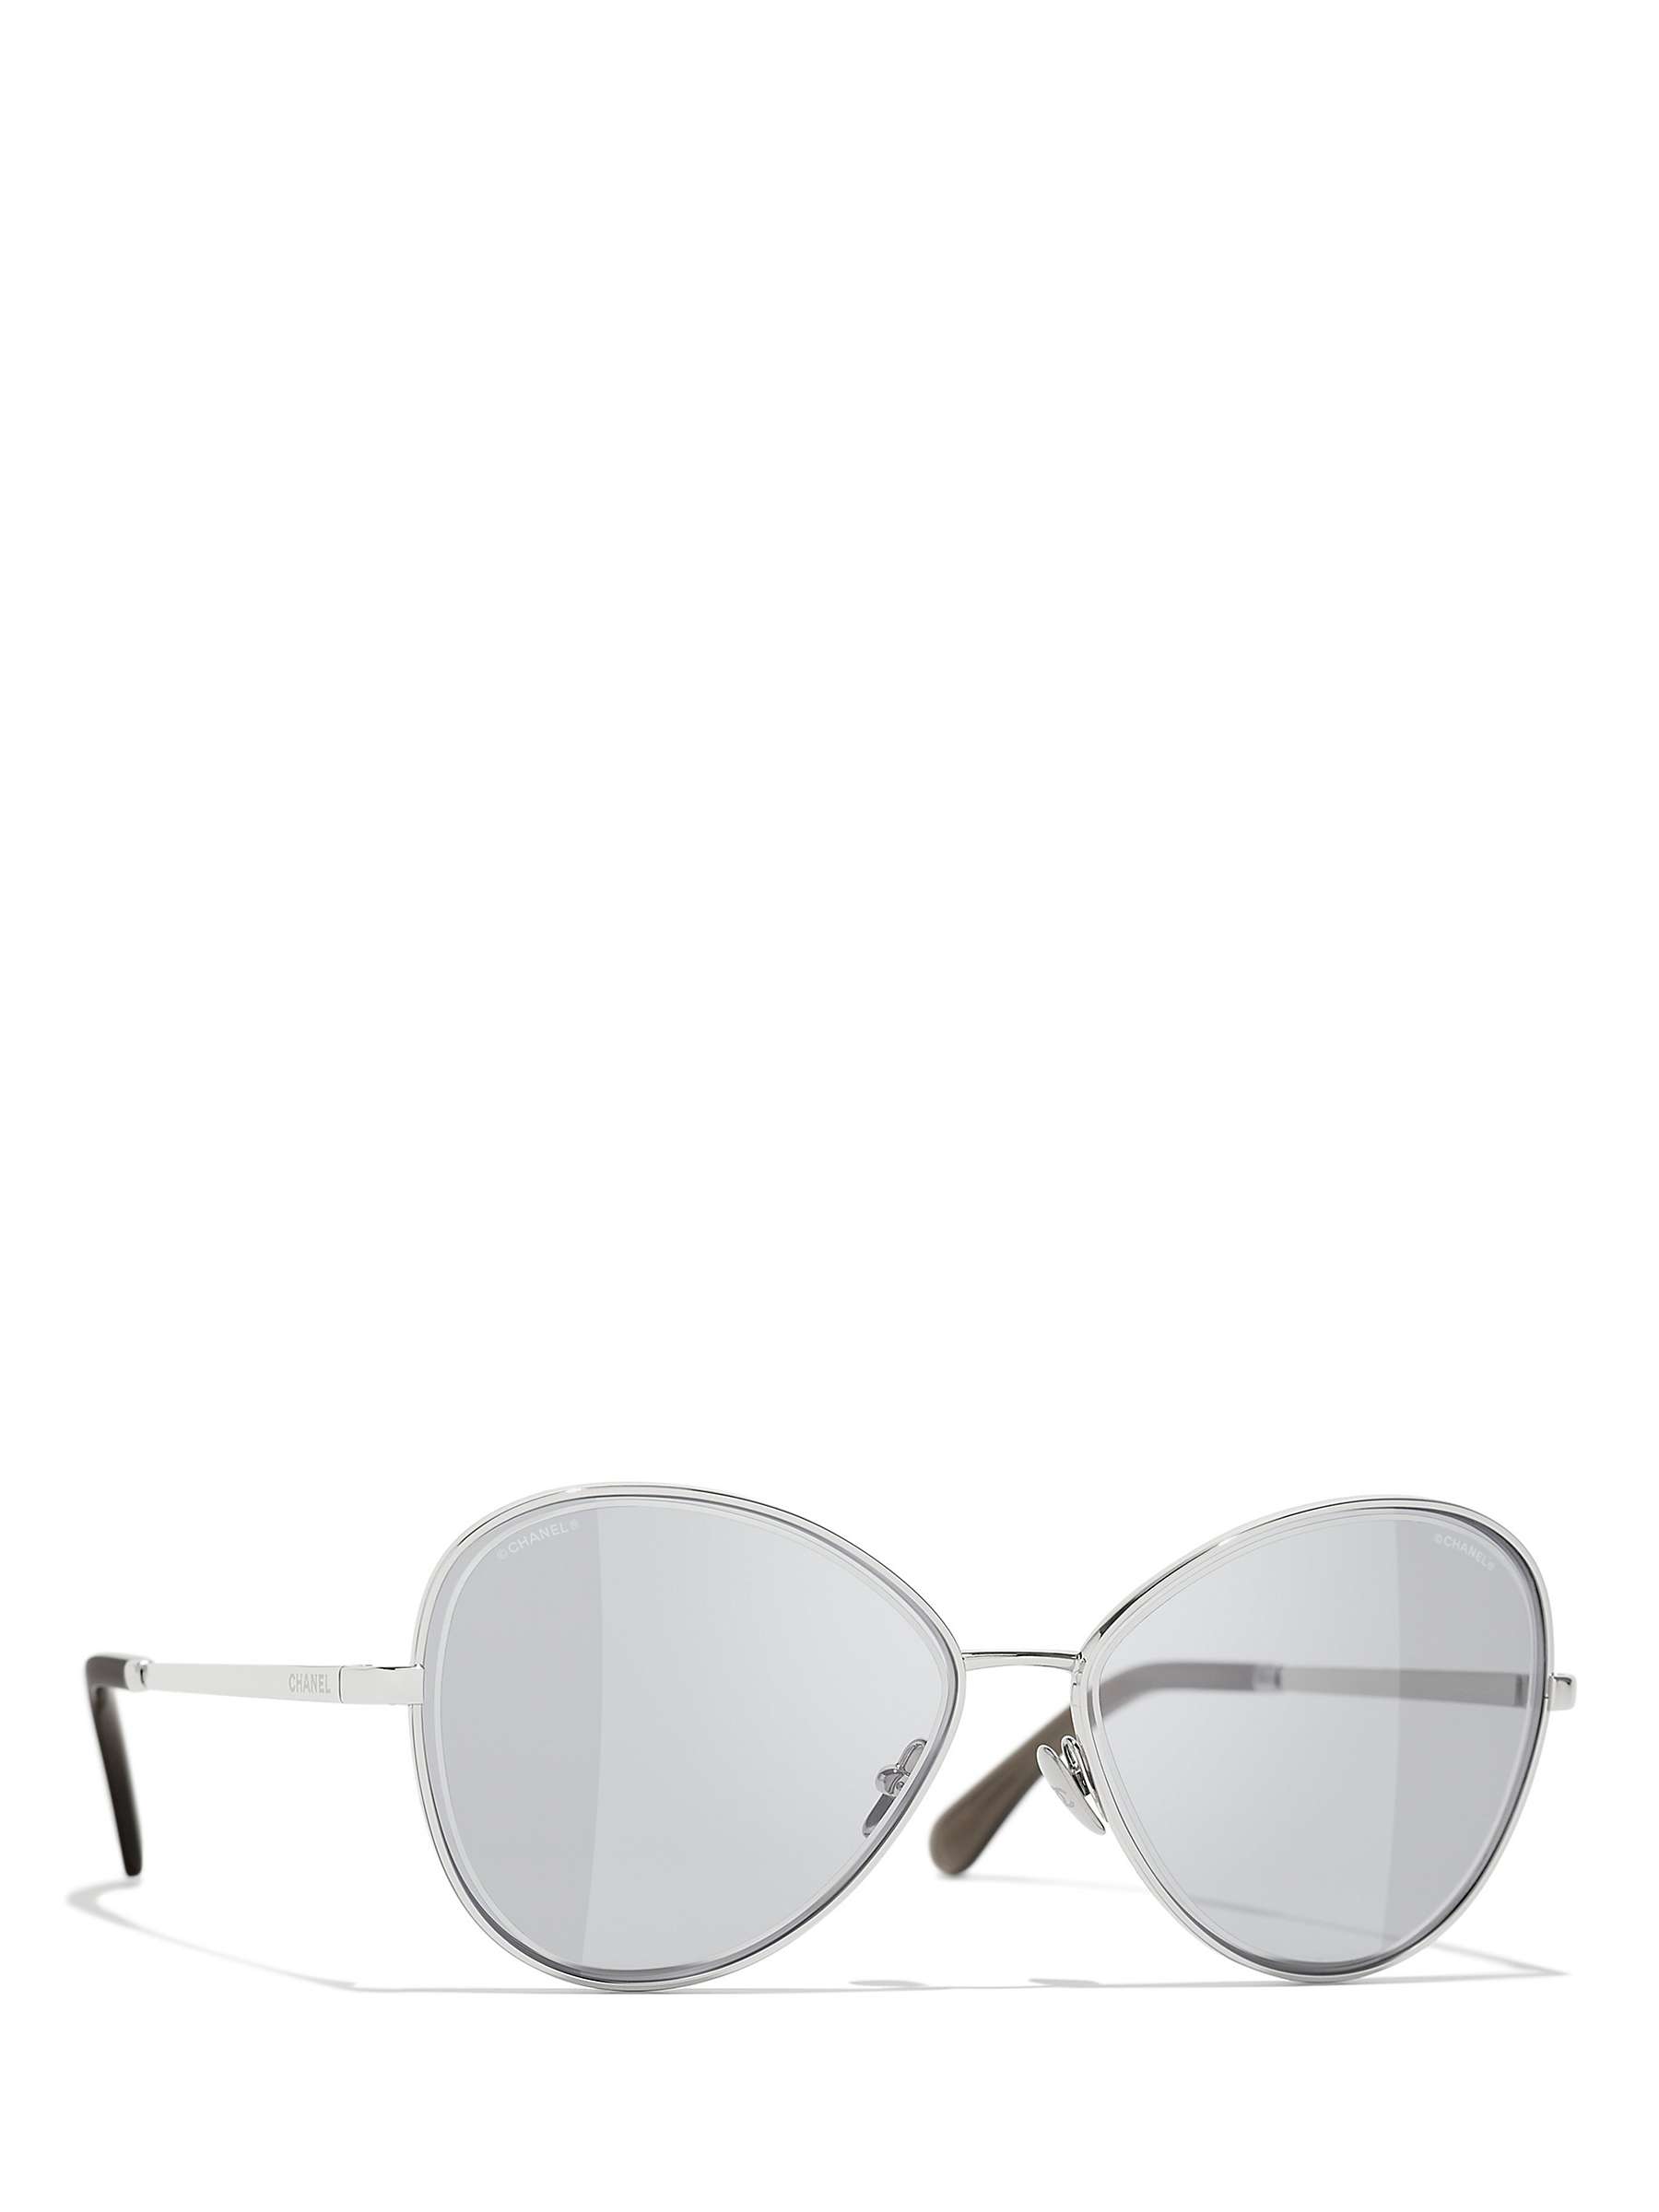 Buy CHANEL Irregular Sunglasses CH4266 Silver/Grey Online at johnlewis.com